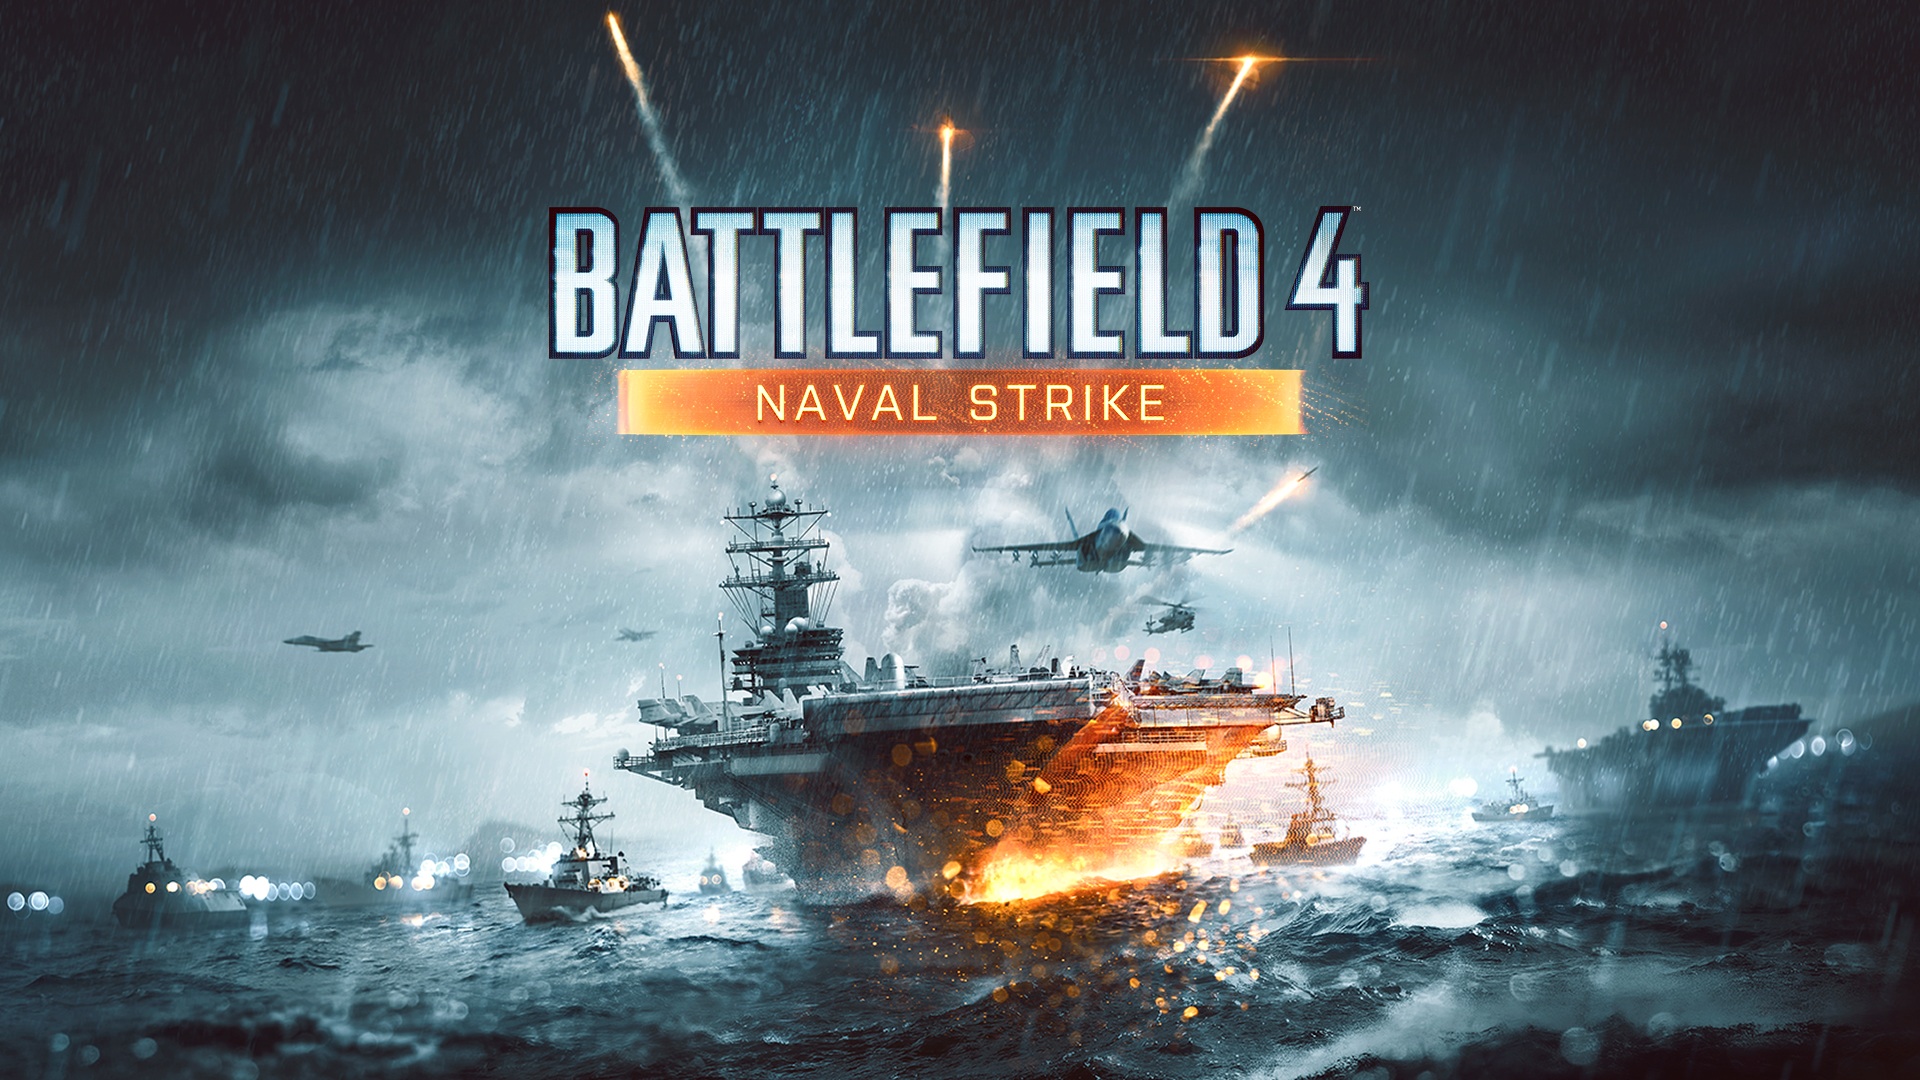 Battlefield Naval Strike Wallpapers HD Wallpapers